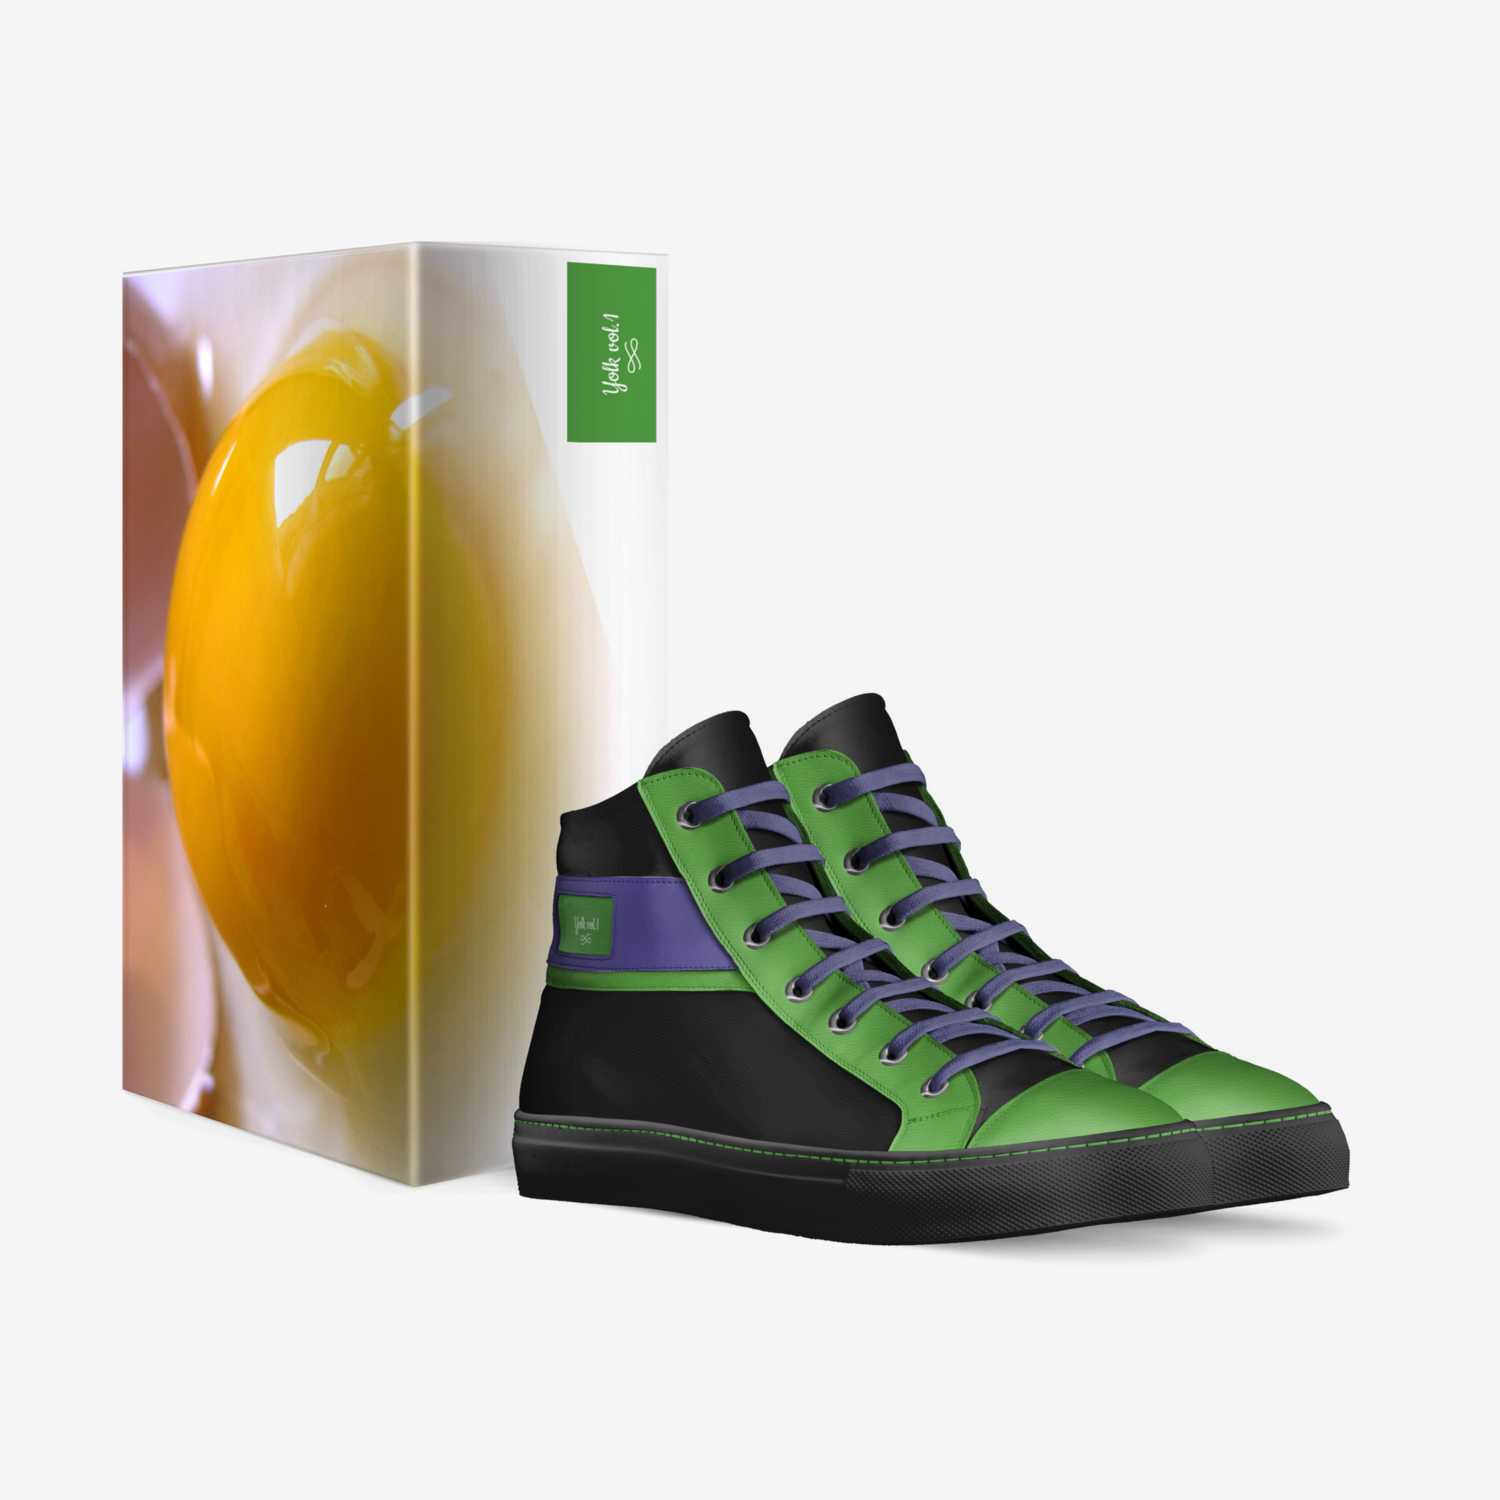 Yolk vol.1 custom made in Italy shoes by Egg Yolk | Box view